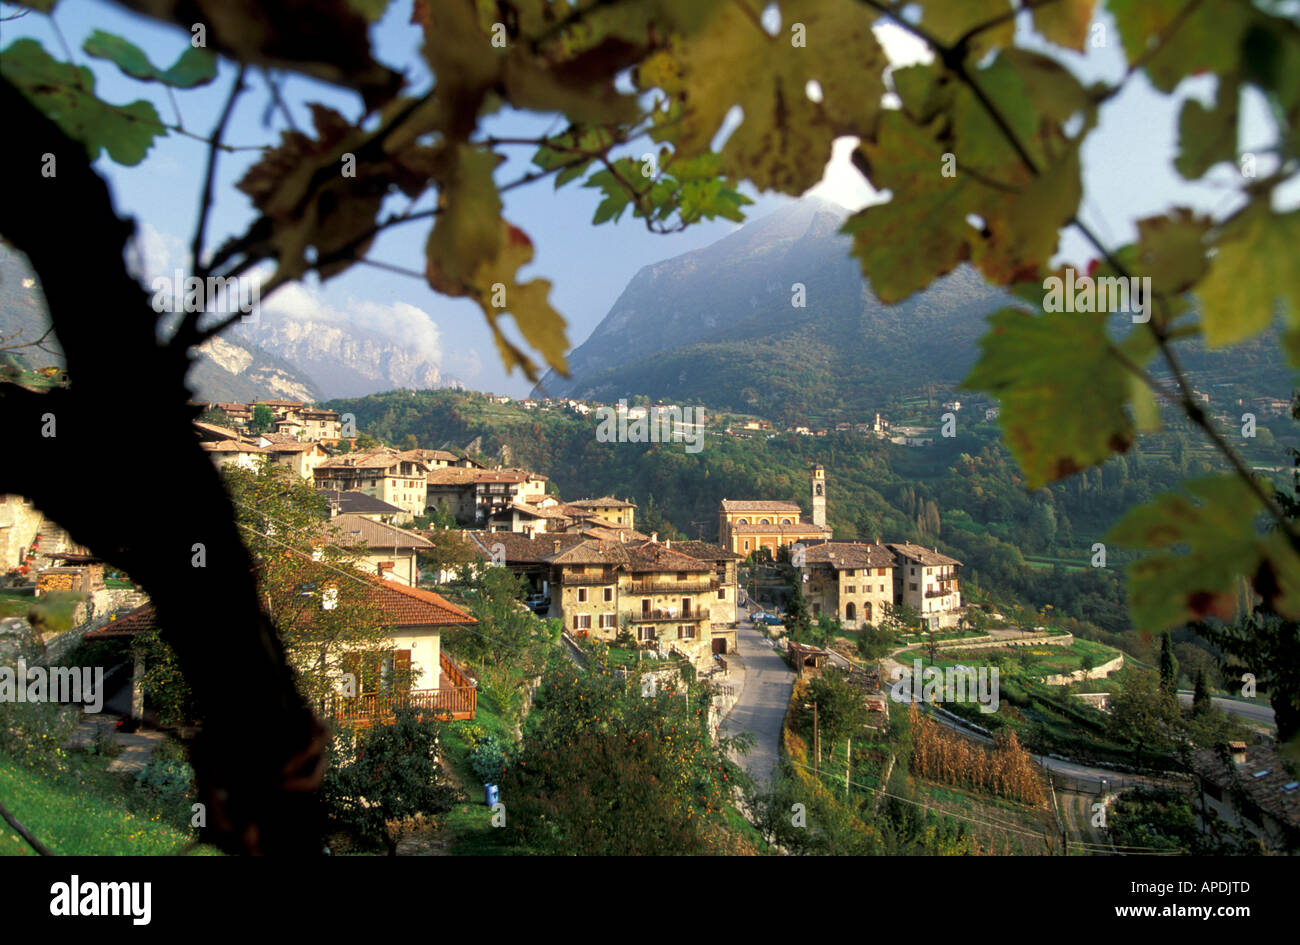 Dorf von Pranzo, Tenno-Tal, Trentino, Italien Stockfoto